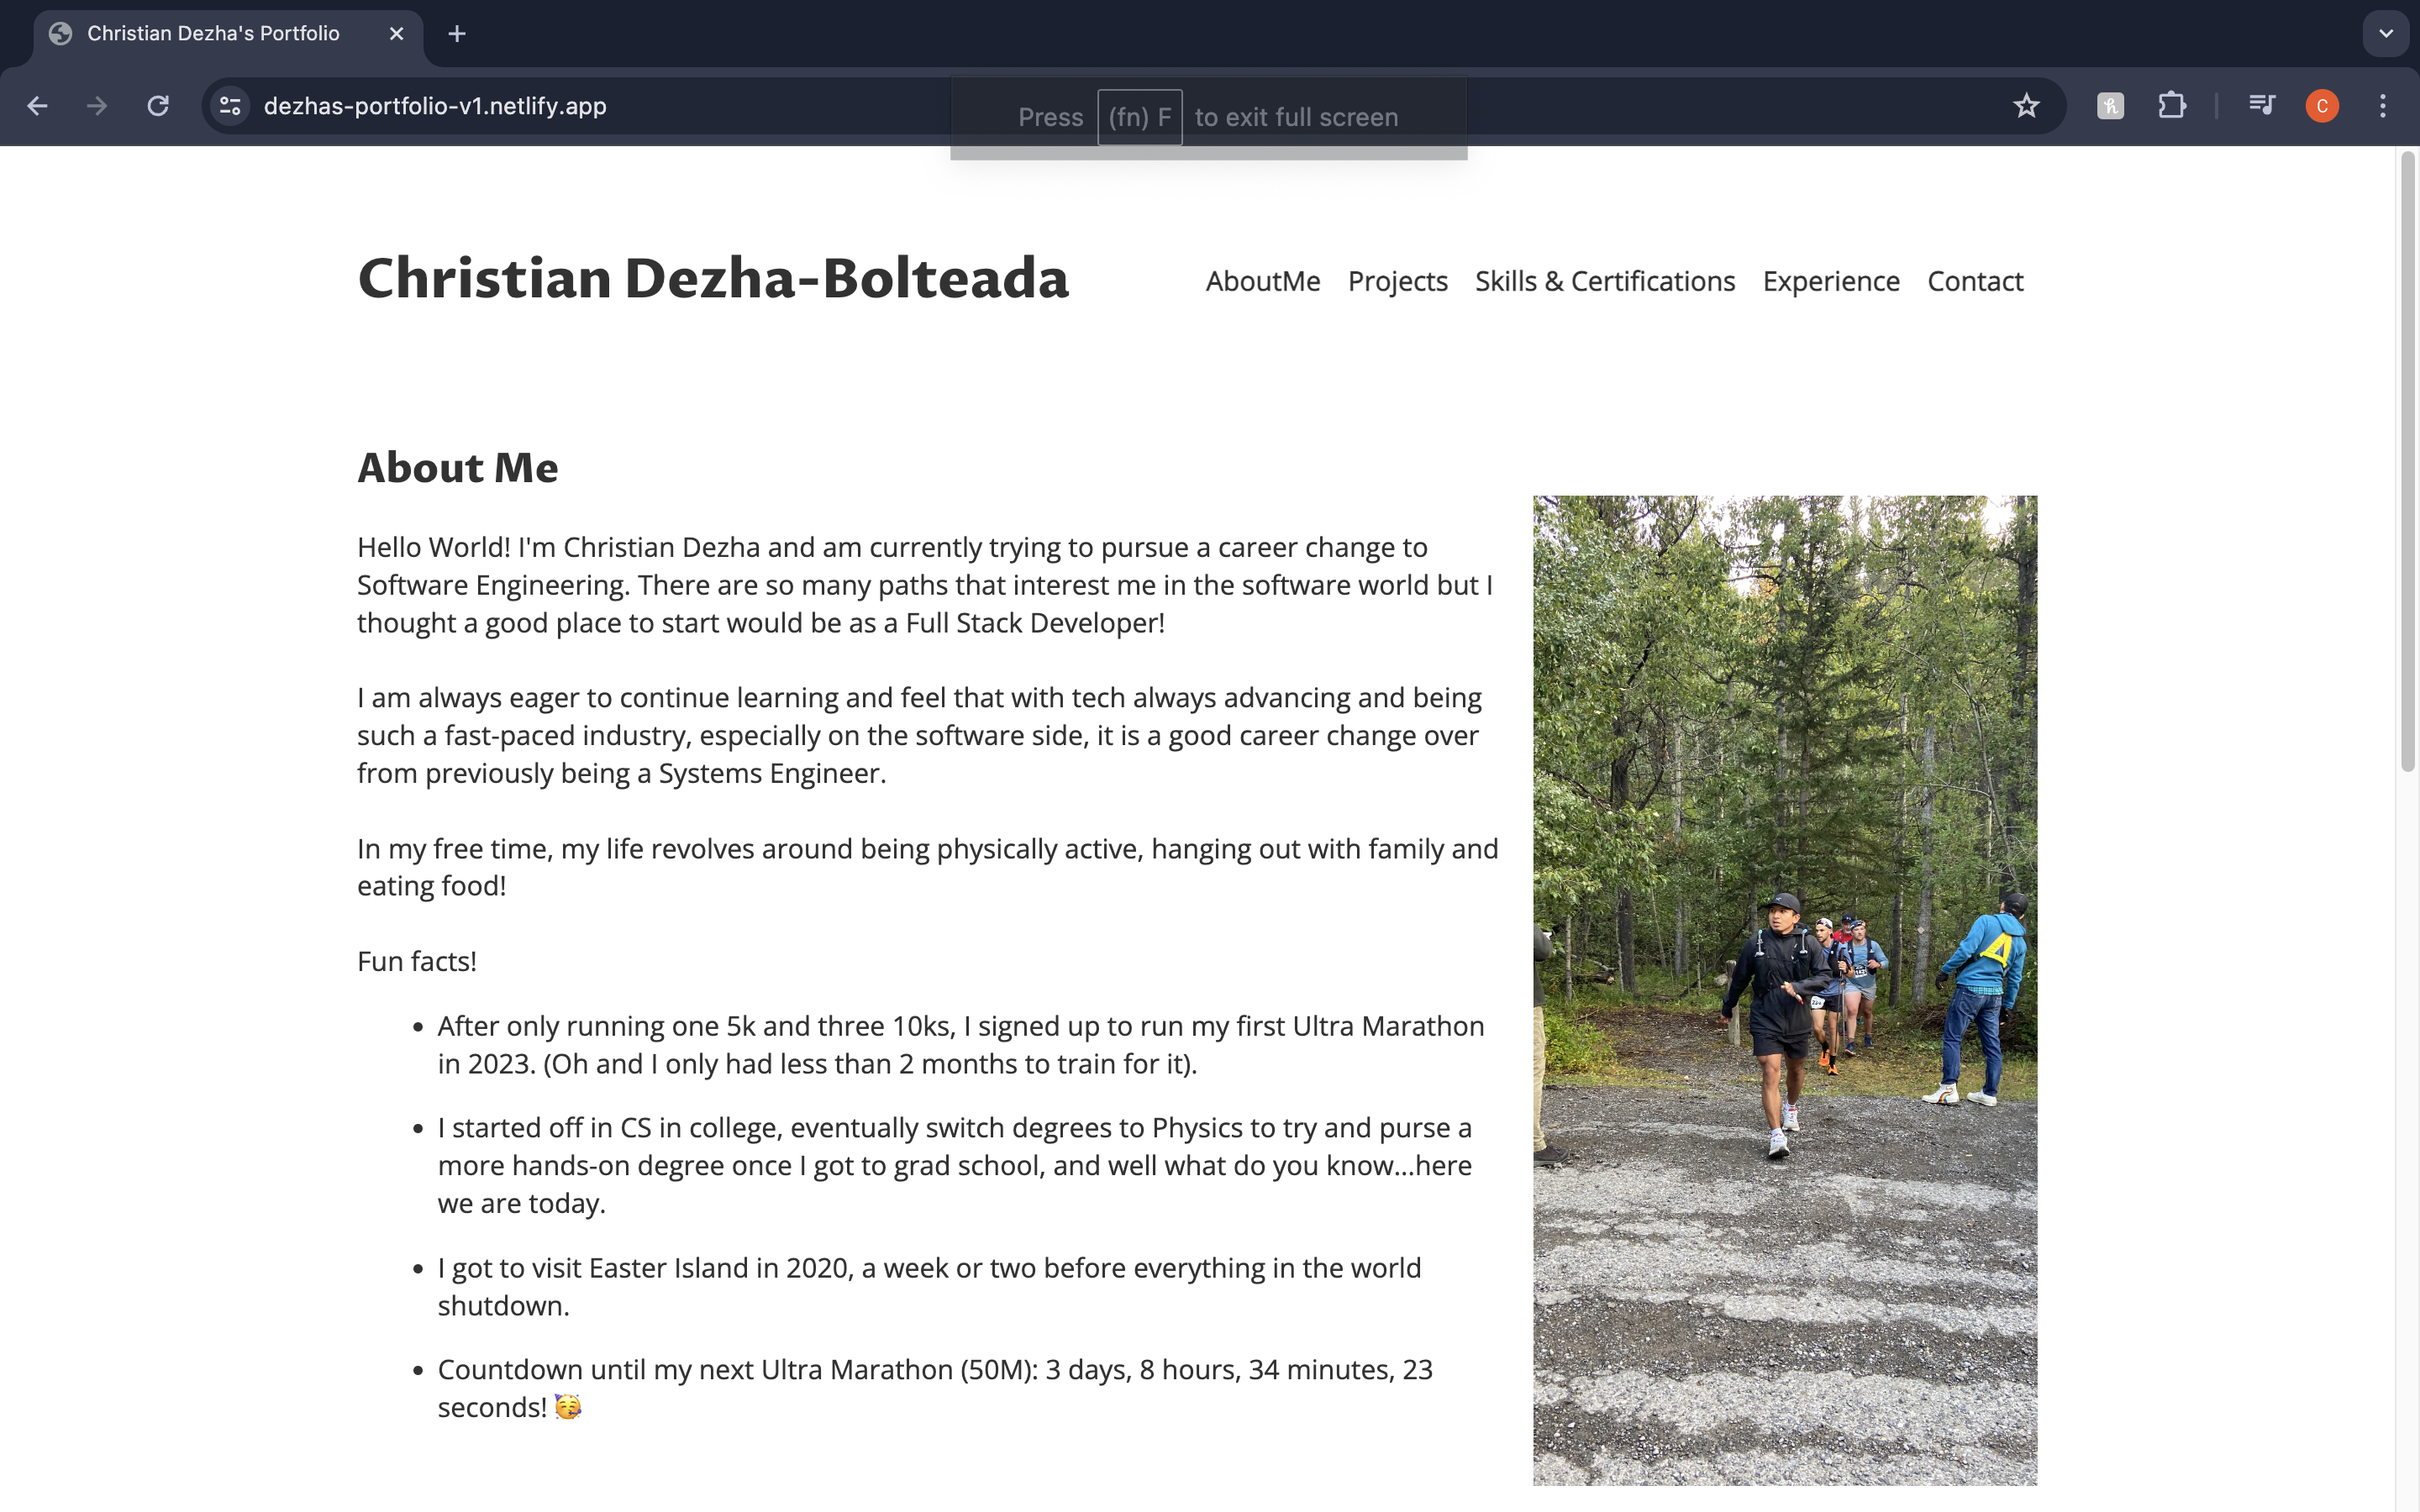 Christian Dezha's Portfolio version 1 main page